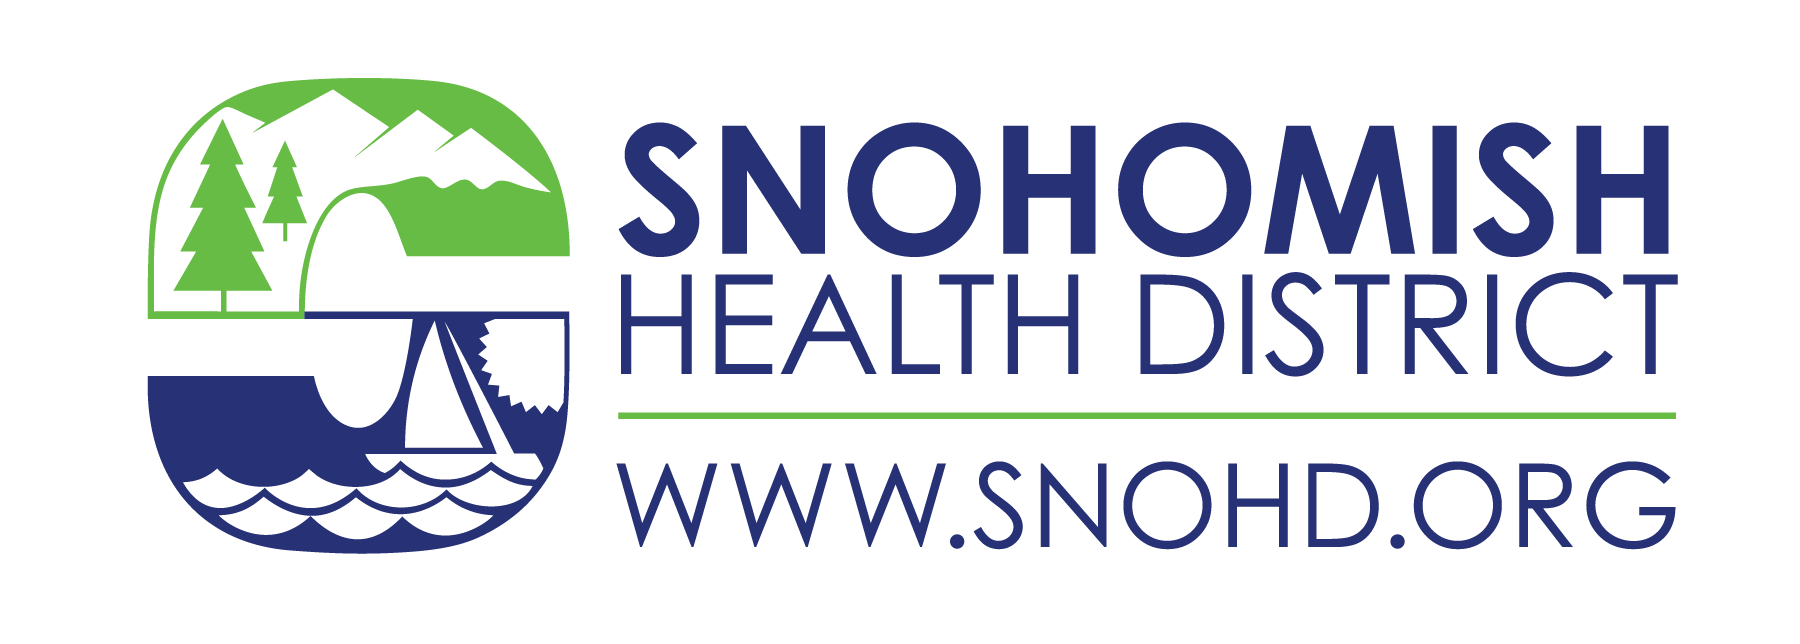 Snohomish Health District Testing Site - Longfellow Building - Symptomatic Logo